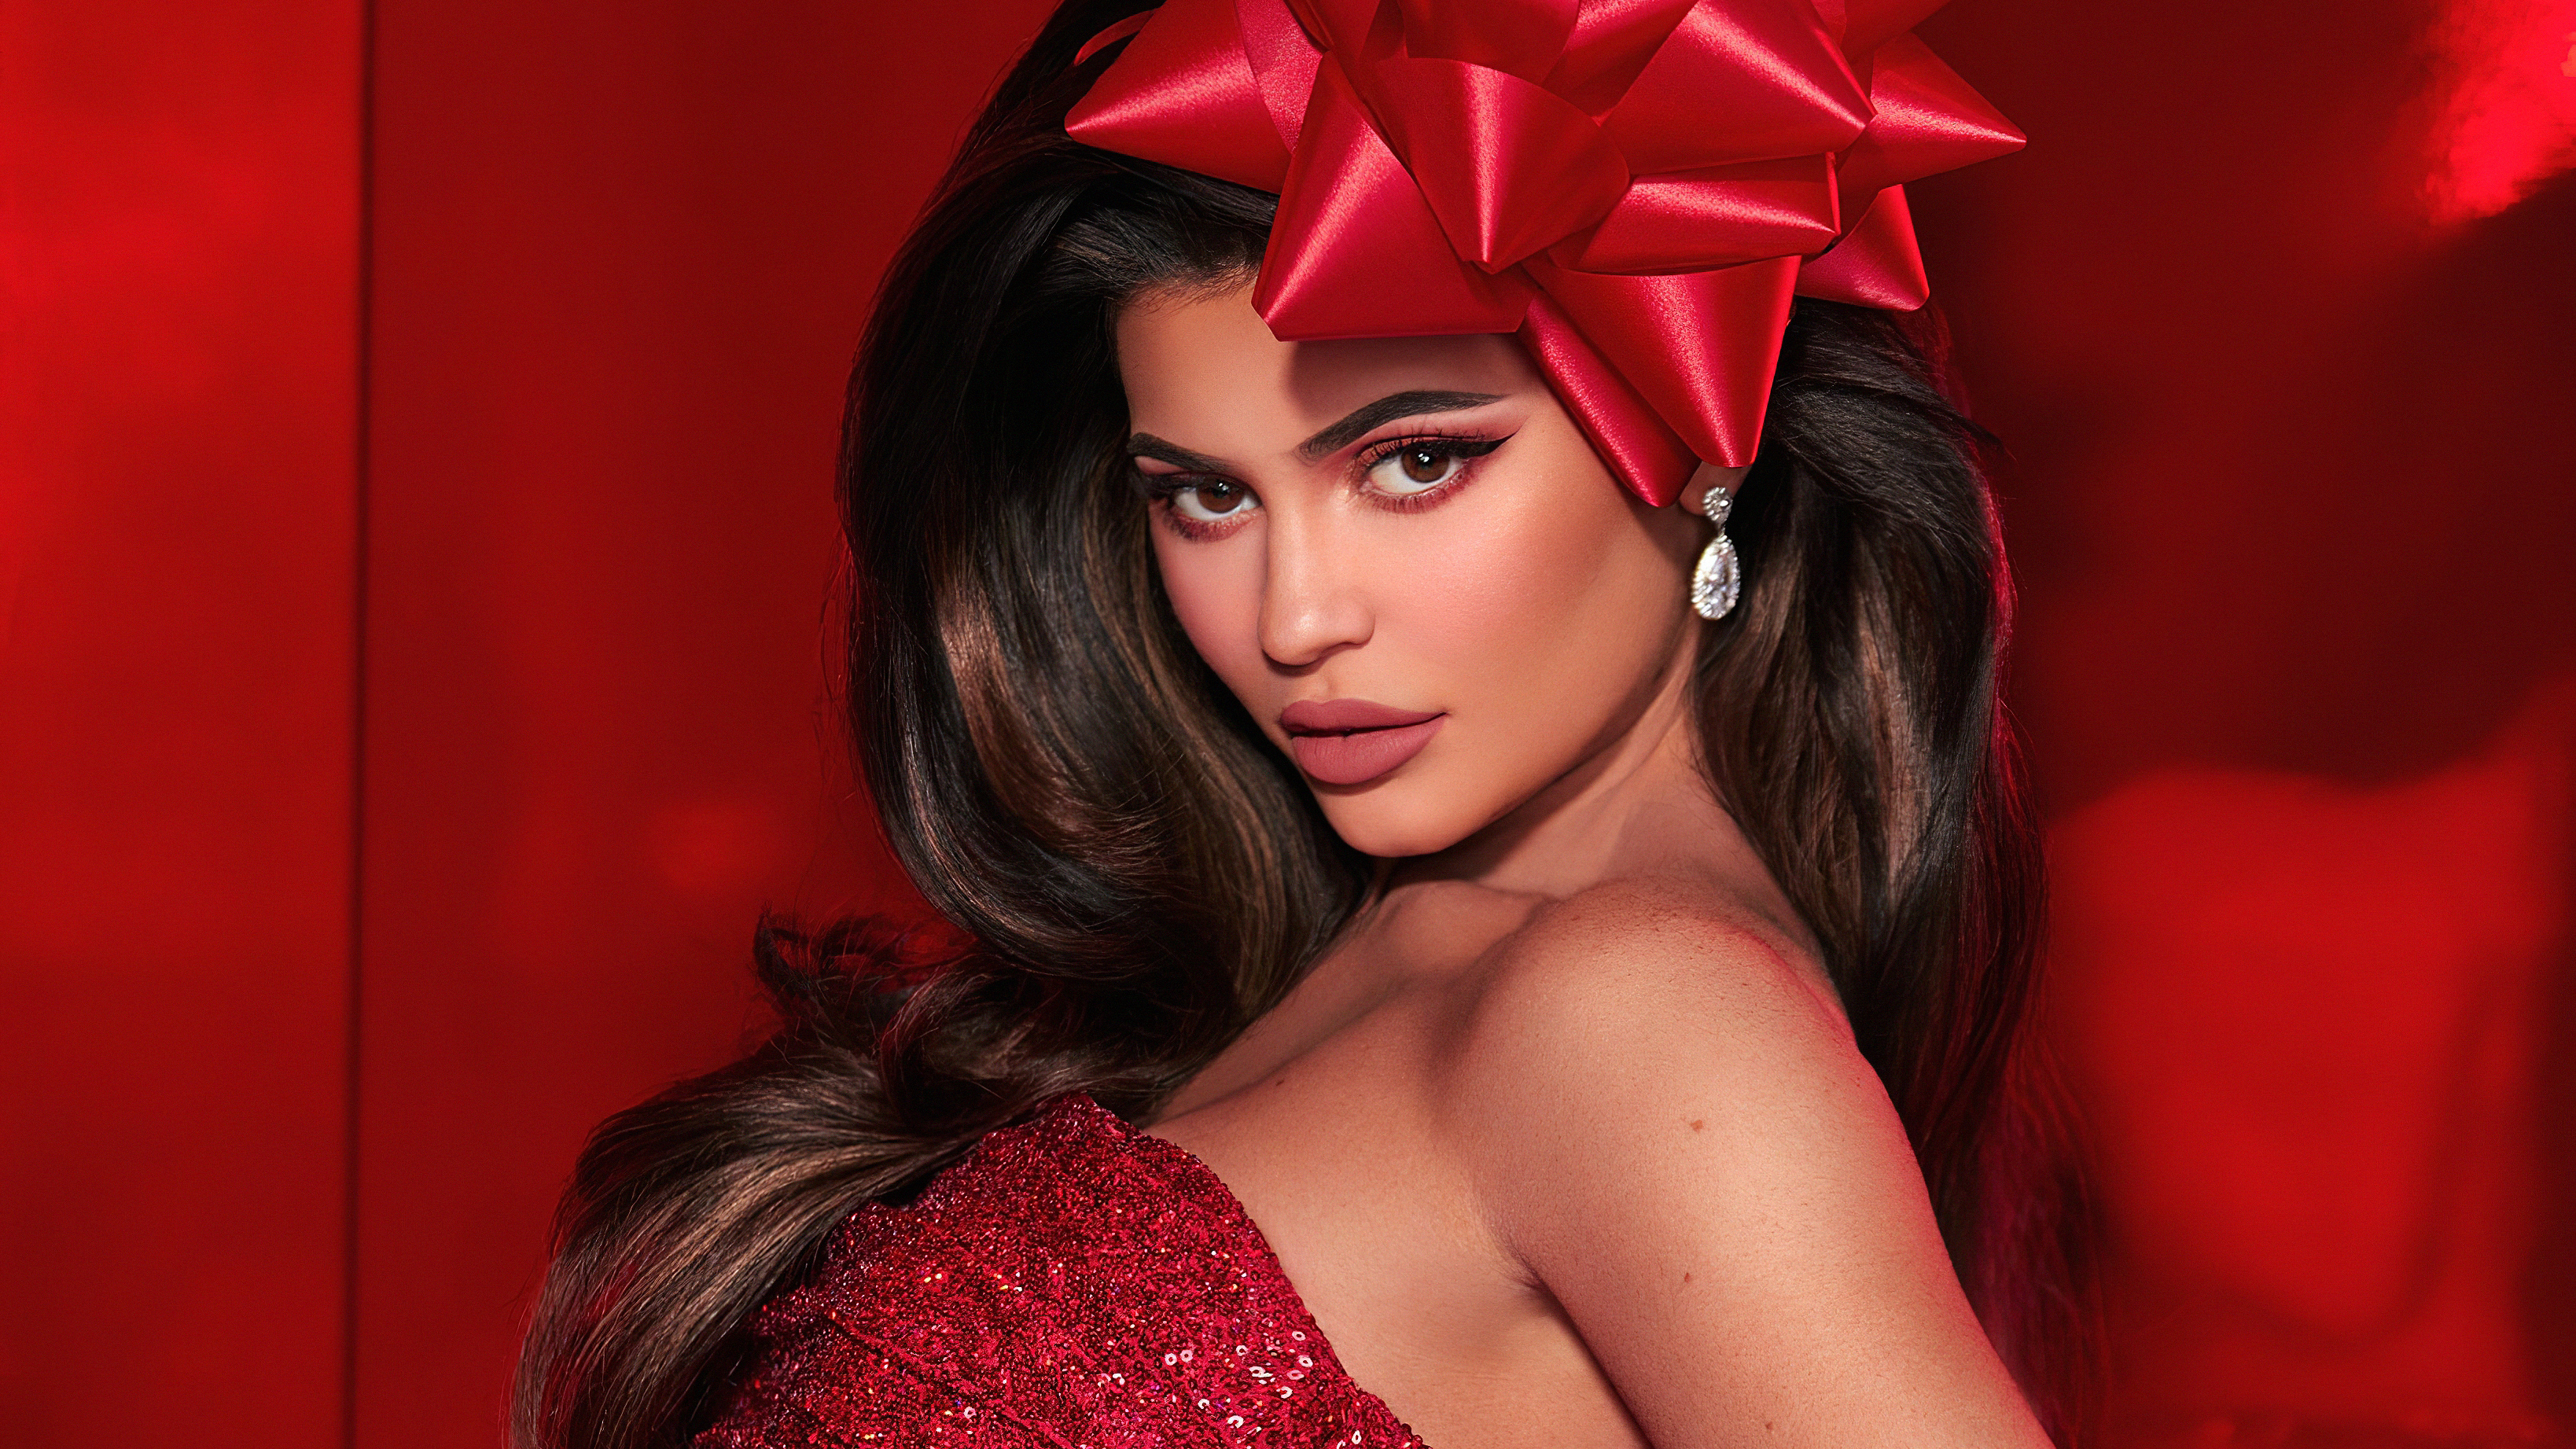 People 3276x1843 Kylie Jenner red presents sequins makeup dress women model brunette red dress closeup